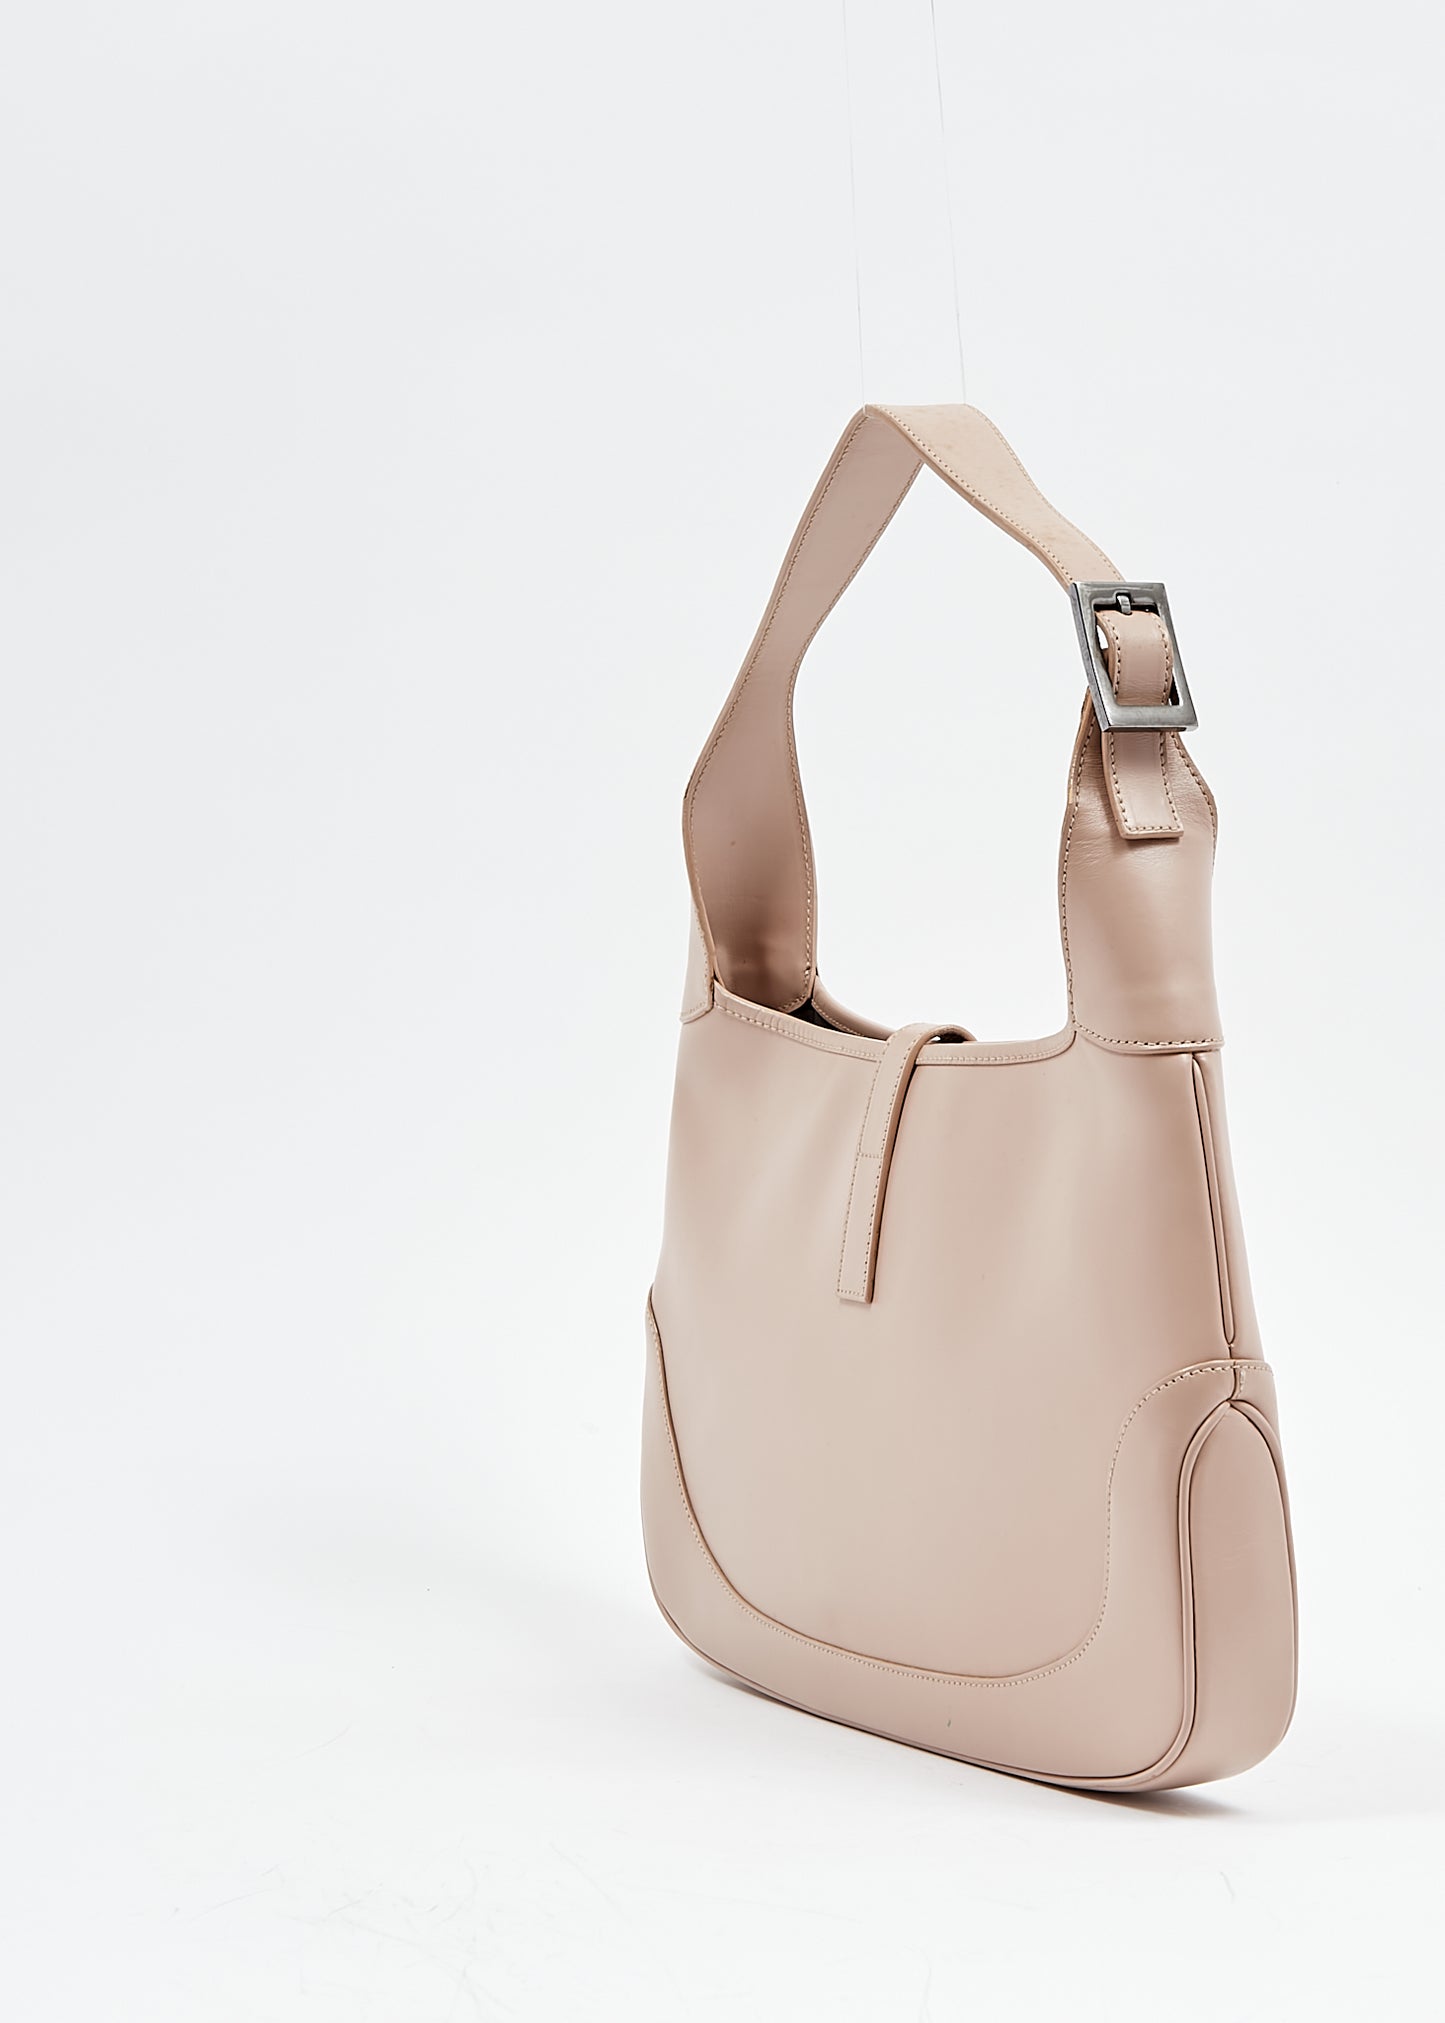 Gucci Beige Leather Small Jackie Shoulder Bag